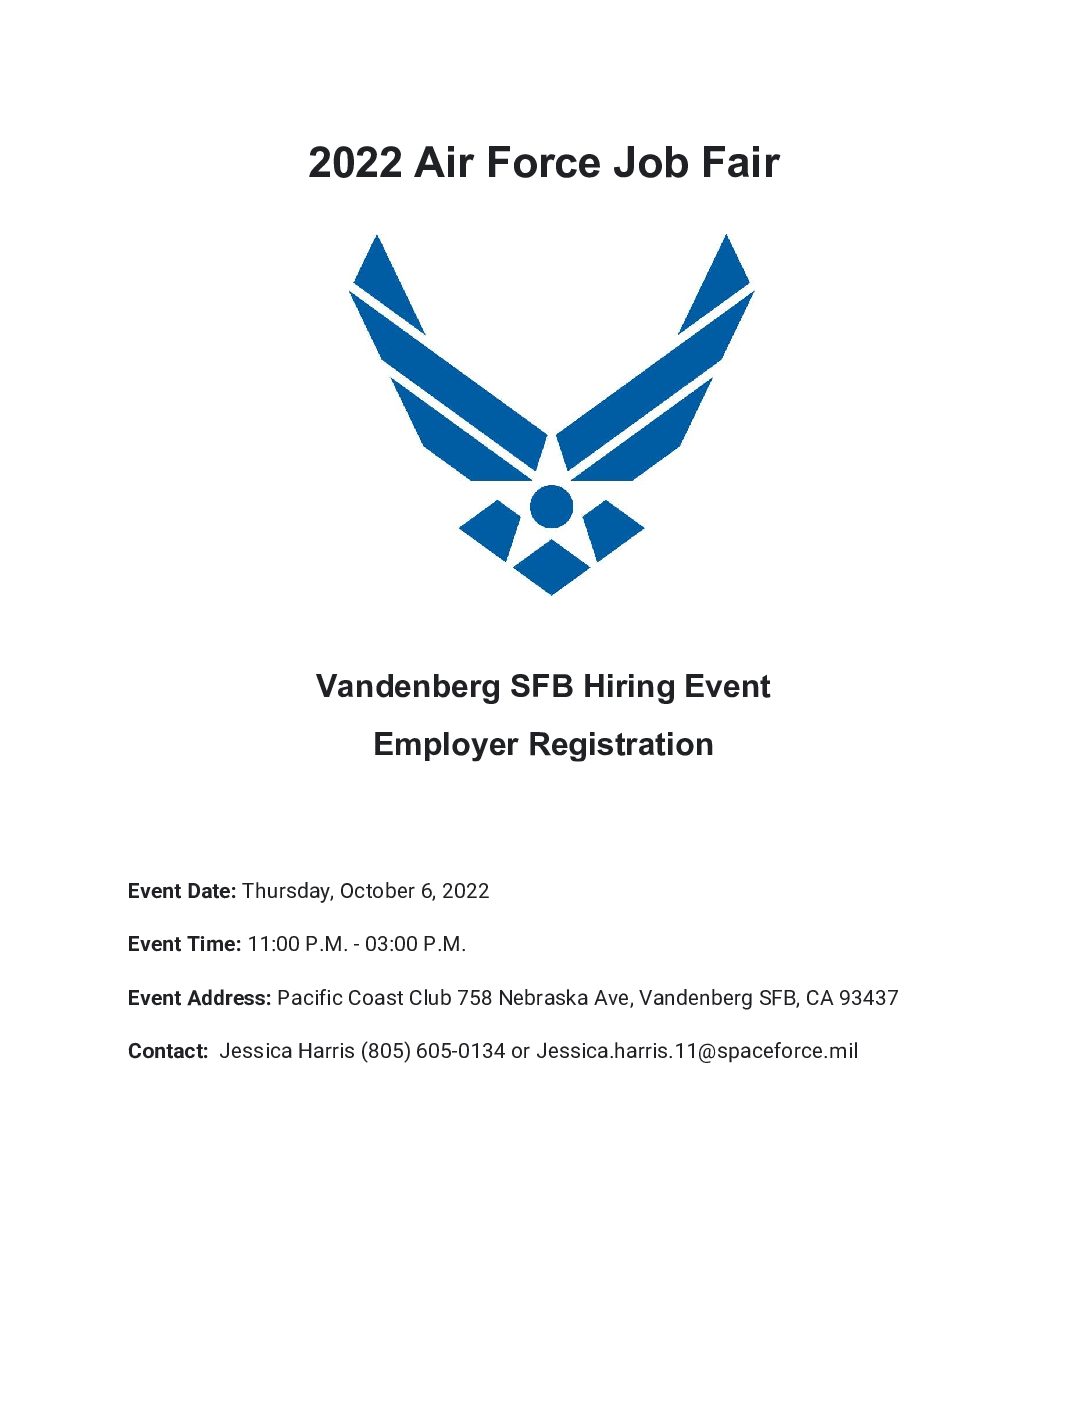 2022 Air Force Job Fair – Vandenberg SFB Hiring Event